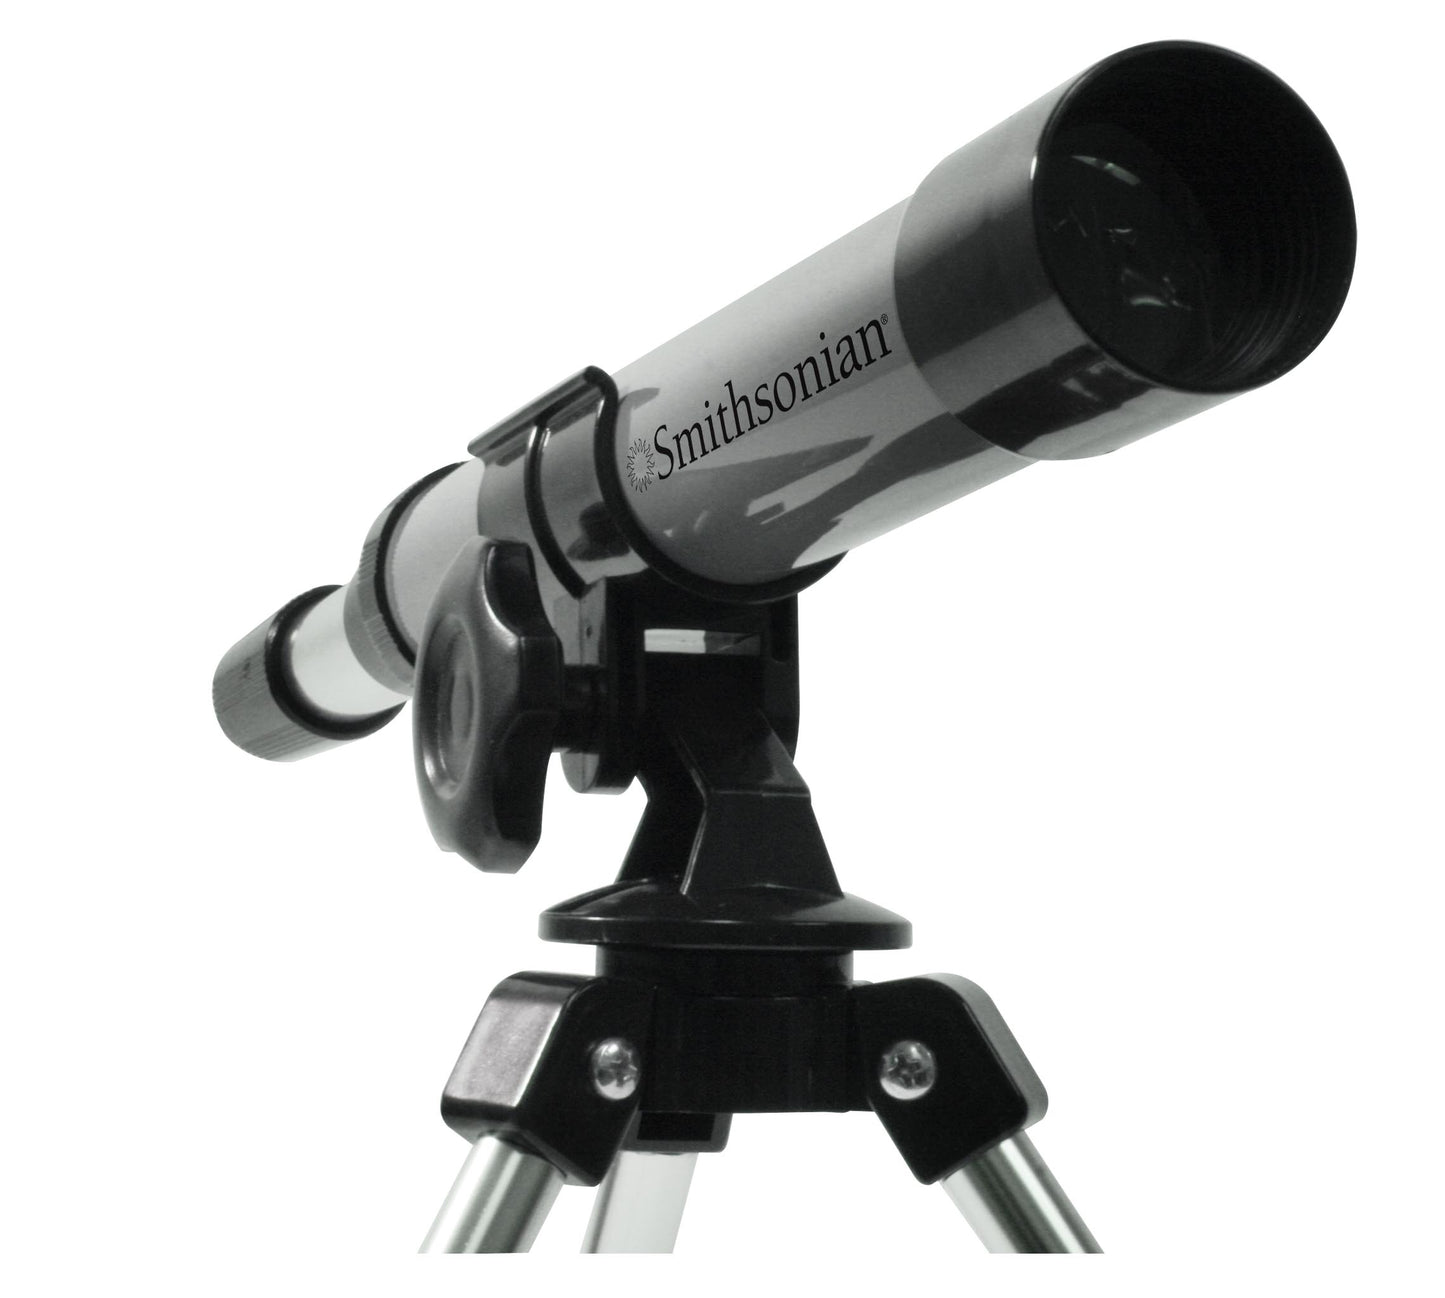 Smithsonian Telescope / Monocular